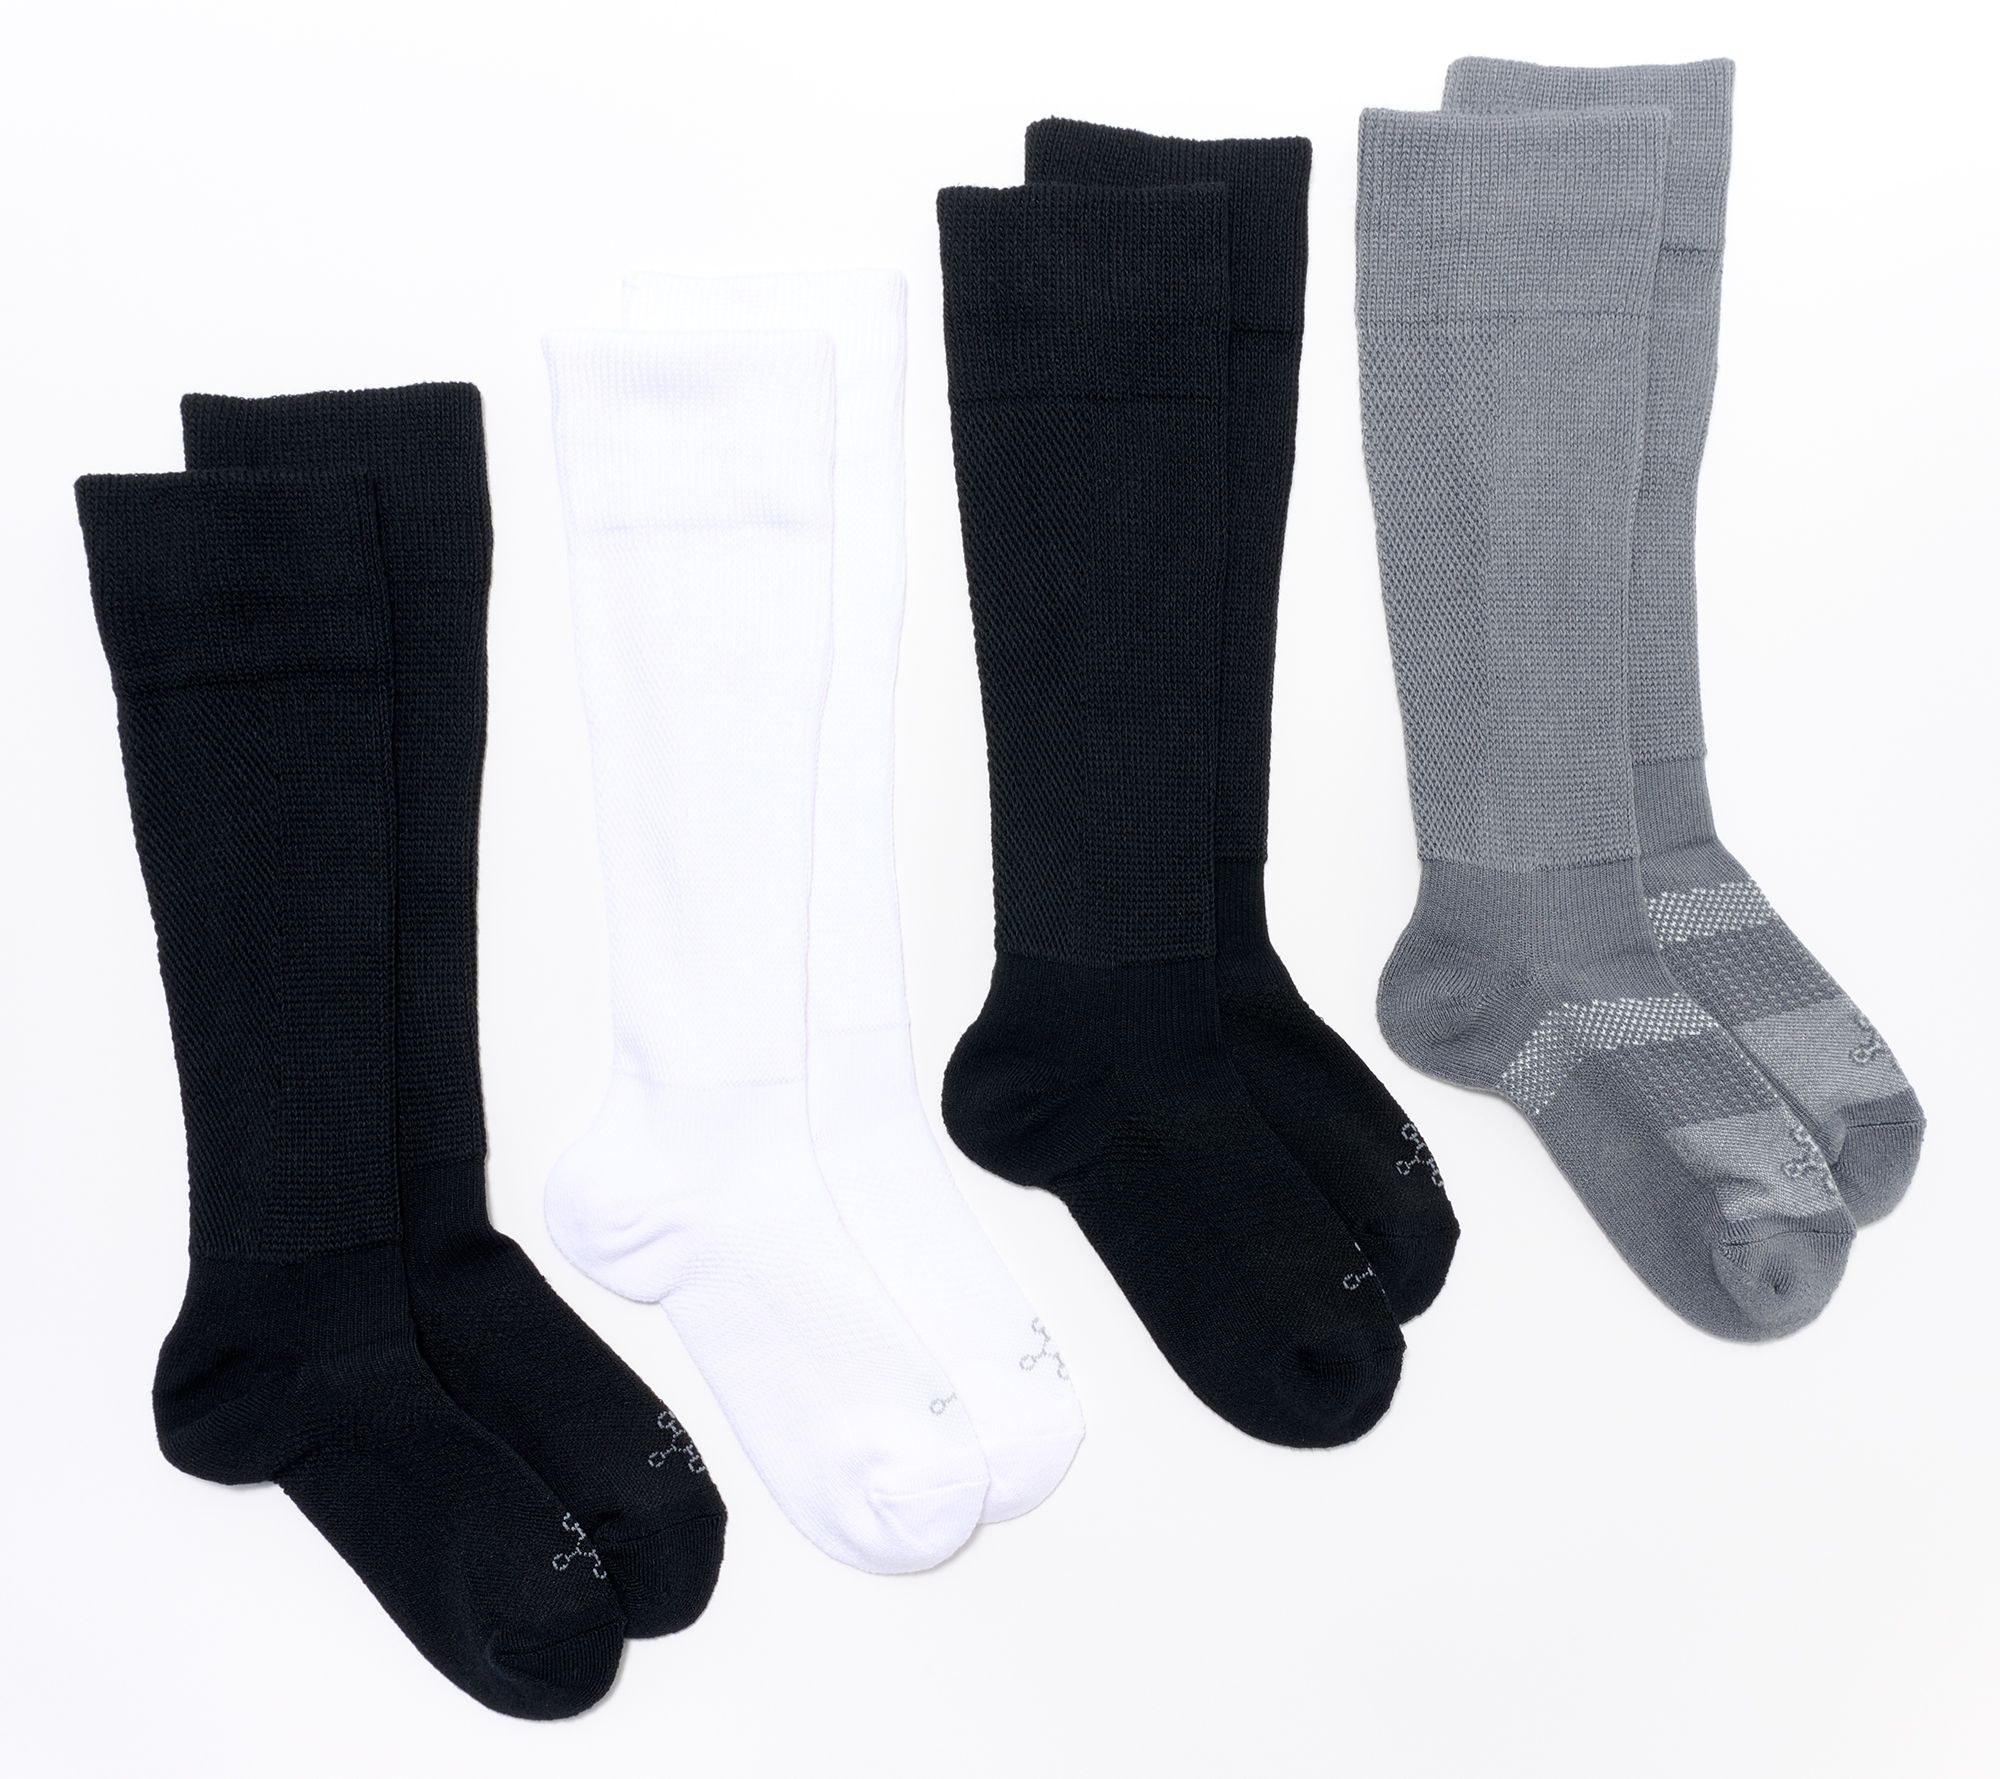 Heat Holders Women's or Men's 3pk LITE Thermal Socks on QVC 